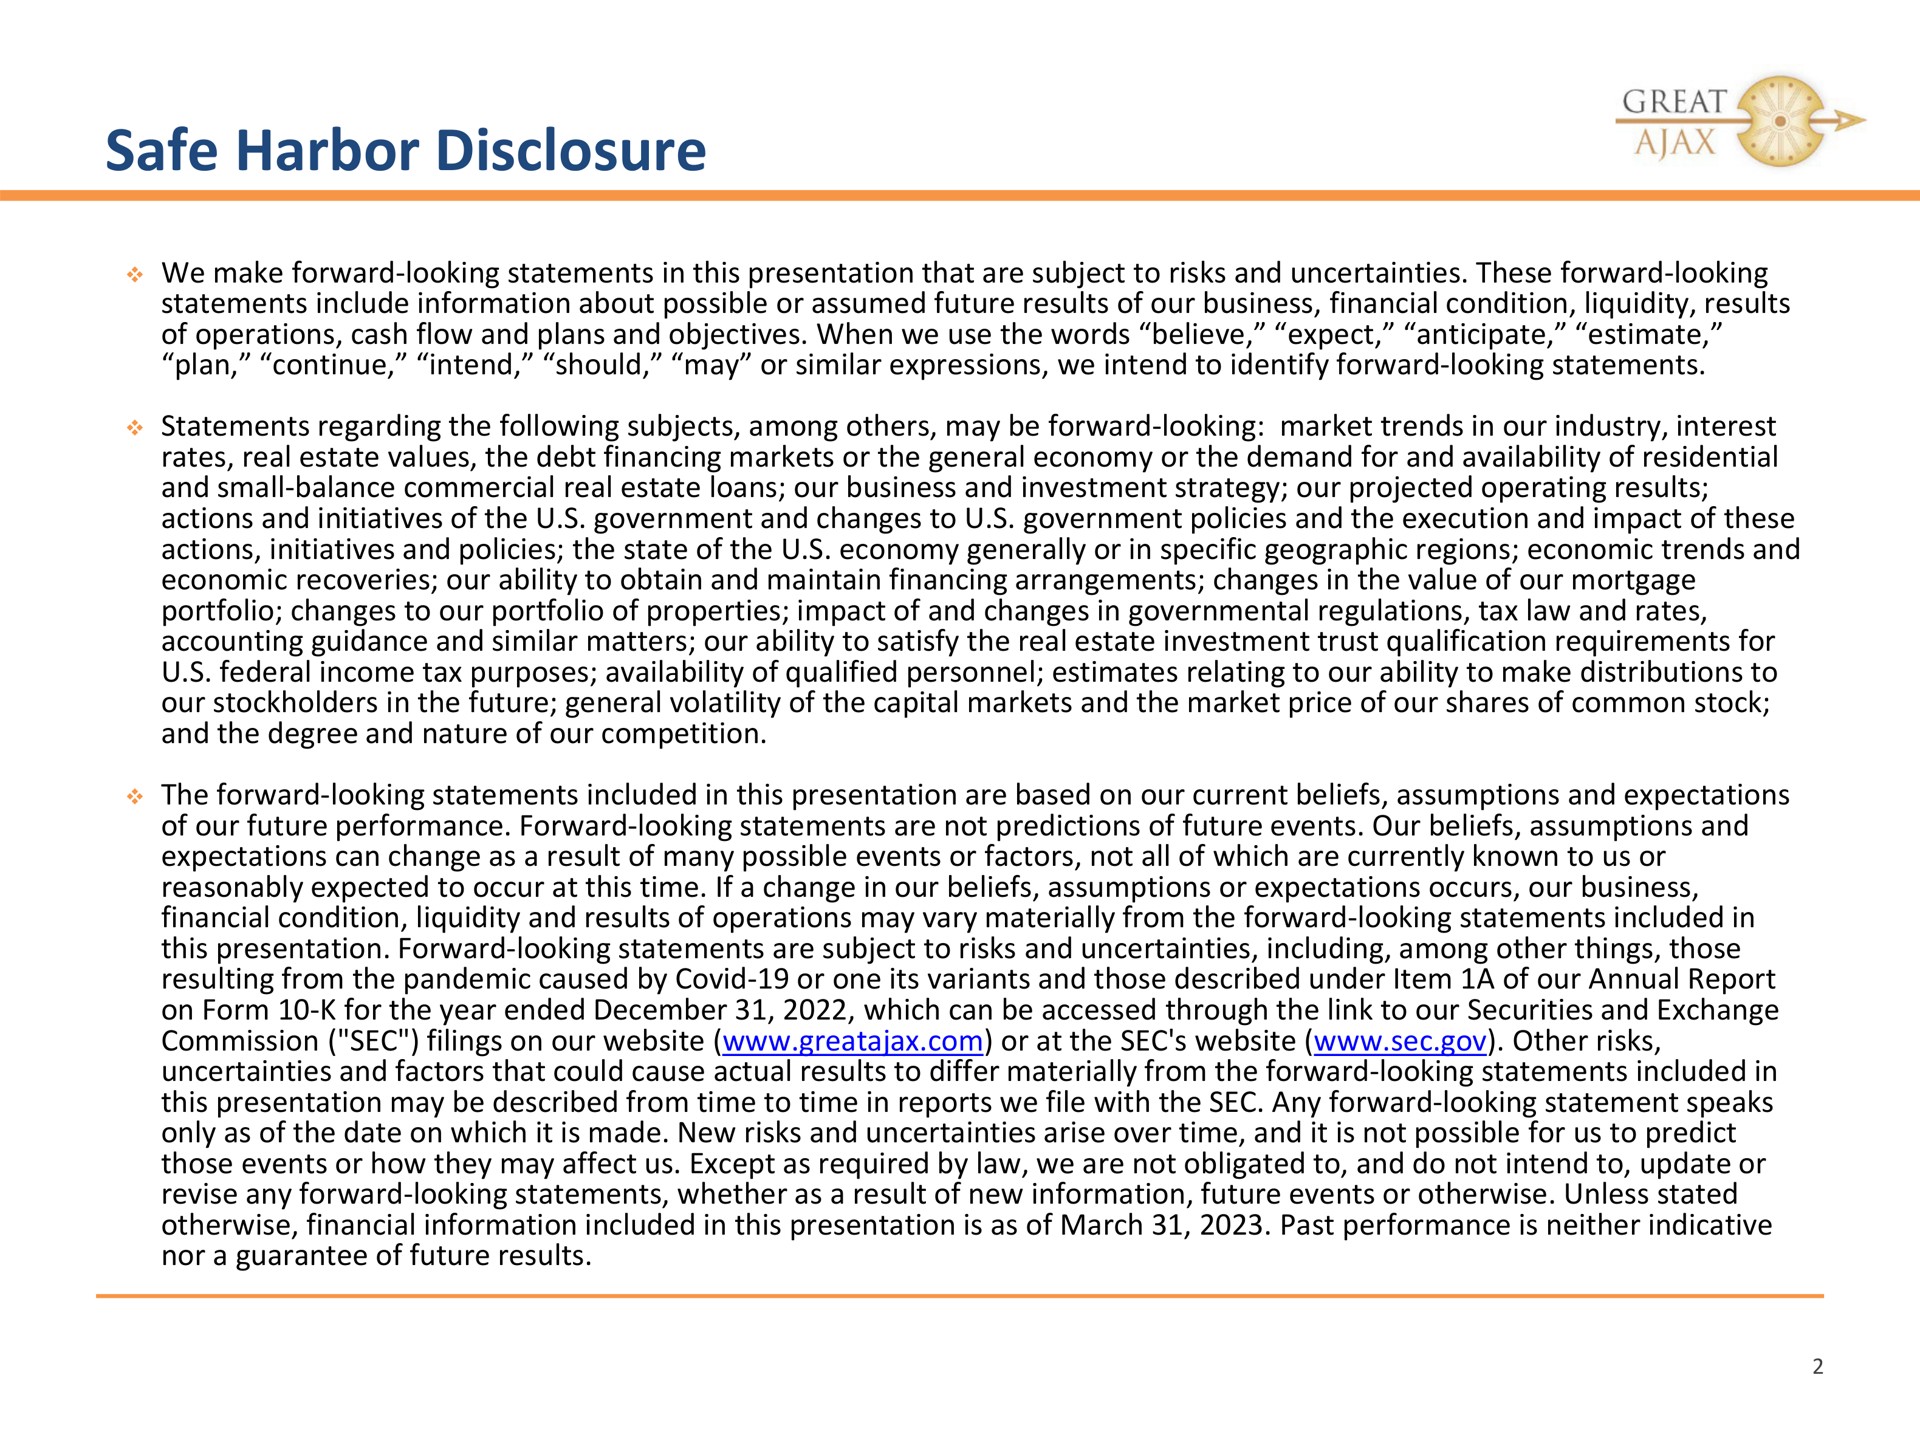 safe harbor disclosure | Great Ajax